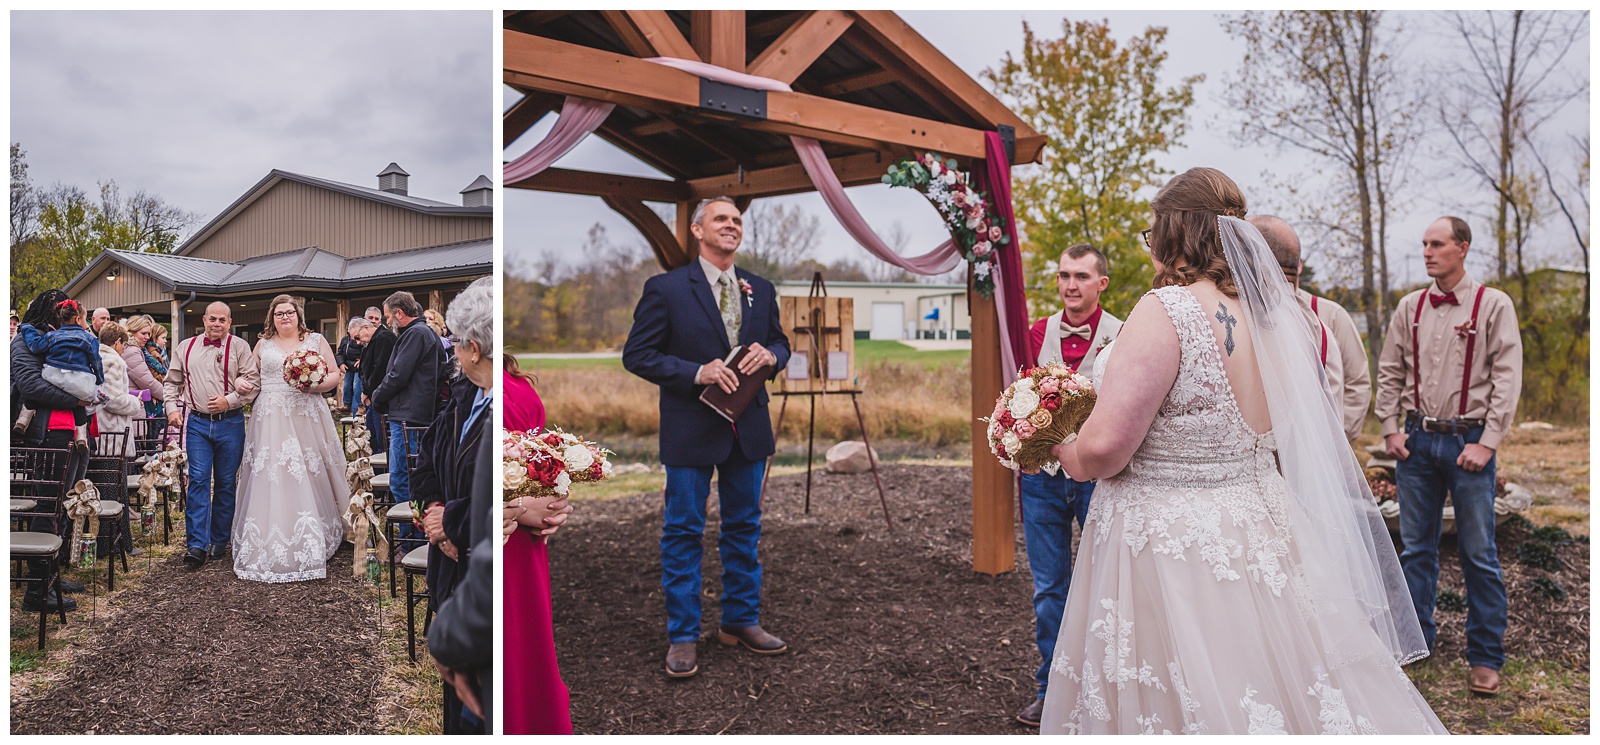 Wedding photography at The Dogwood Gardens in Peculiar, Missouri, by Kansas City wedding photographers Wisdom-Watson Weddings.